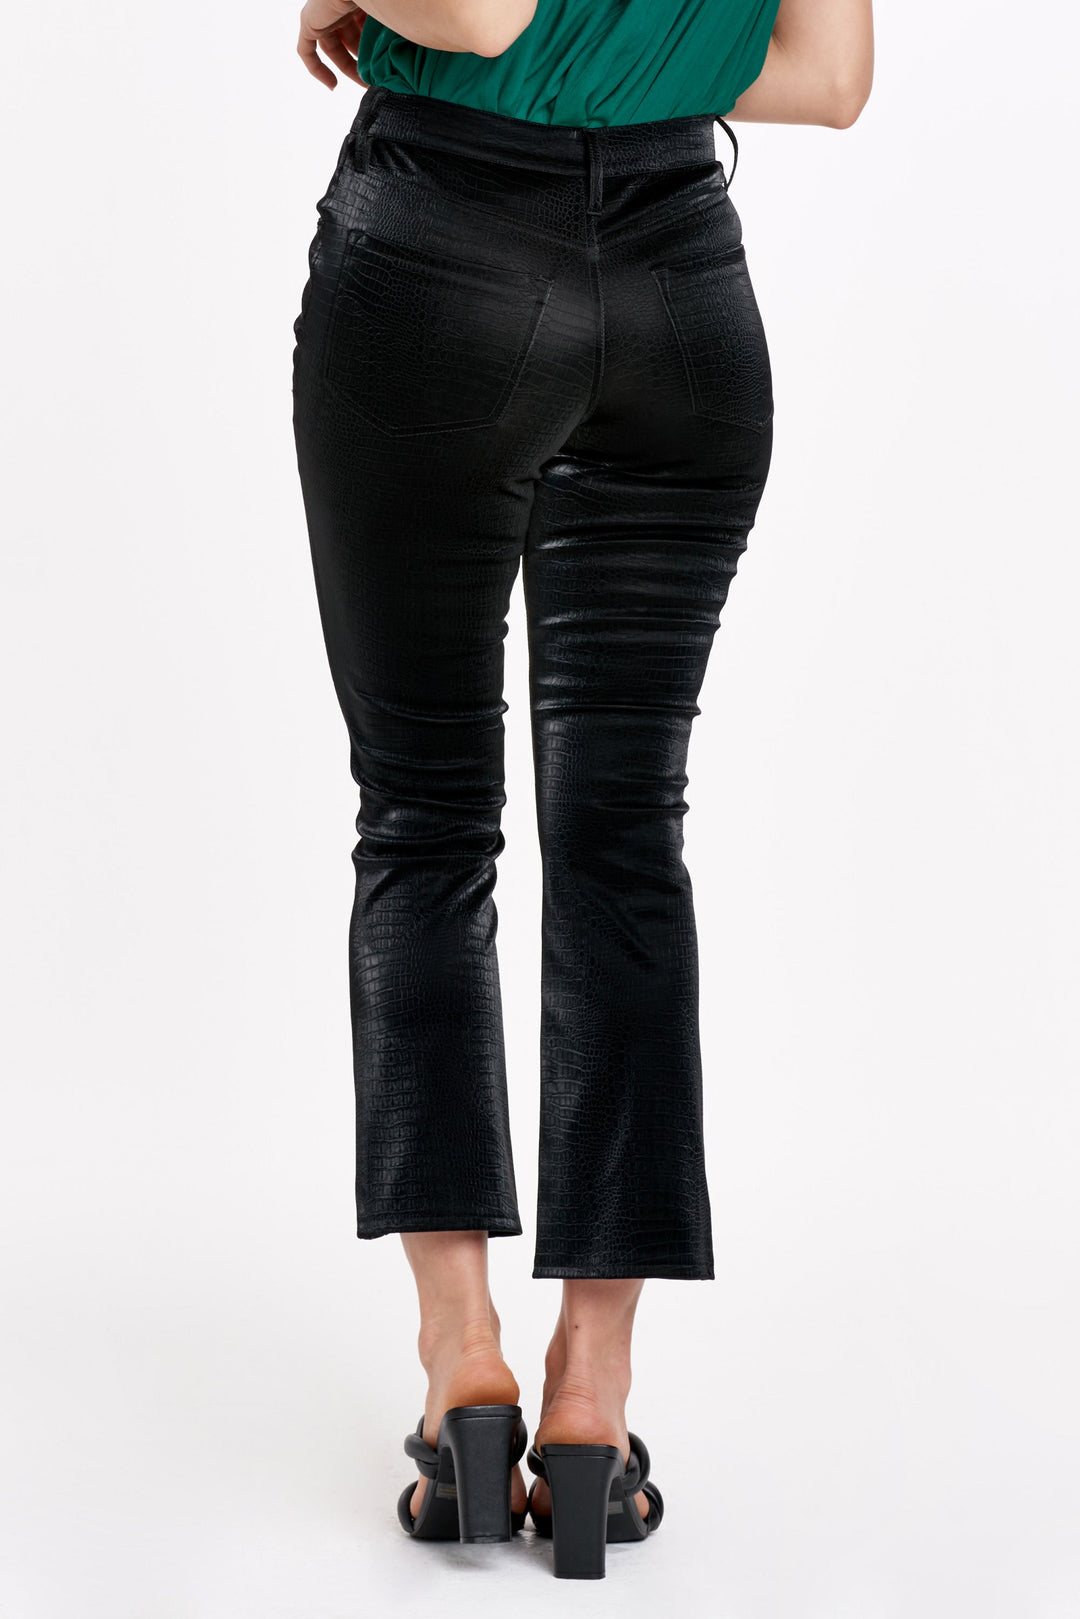 image of a female model wearing a JEANNE SUPER HIGH RISE CROPPED FLARE PANTS BLACK EMBOSSED DEAR JOHN DENIM 